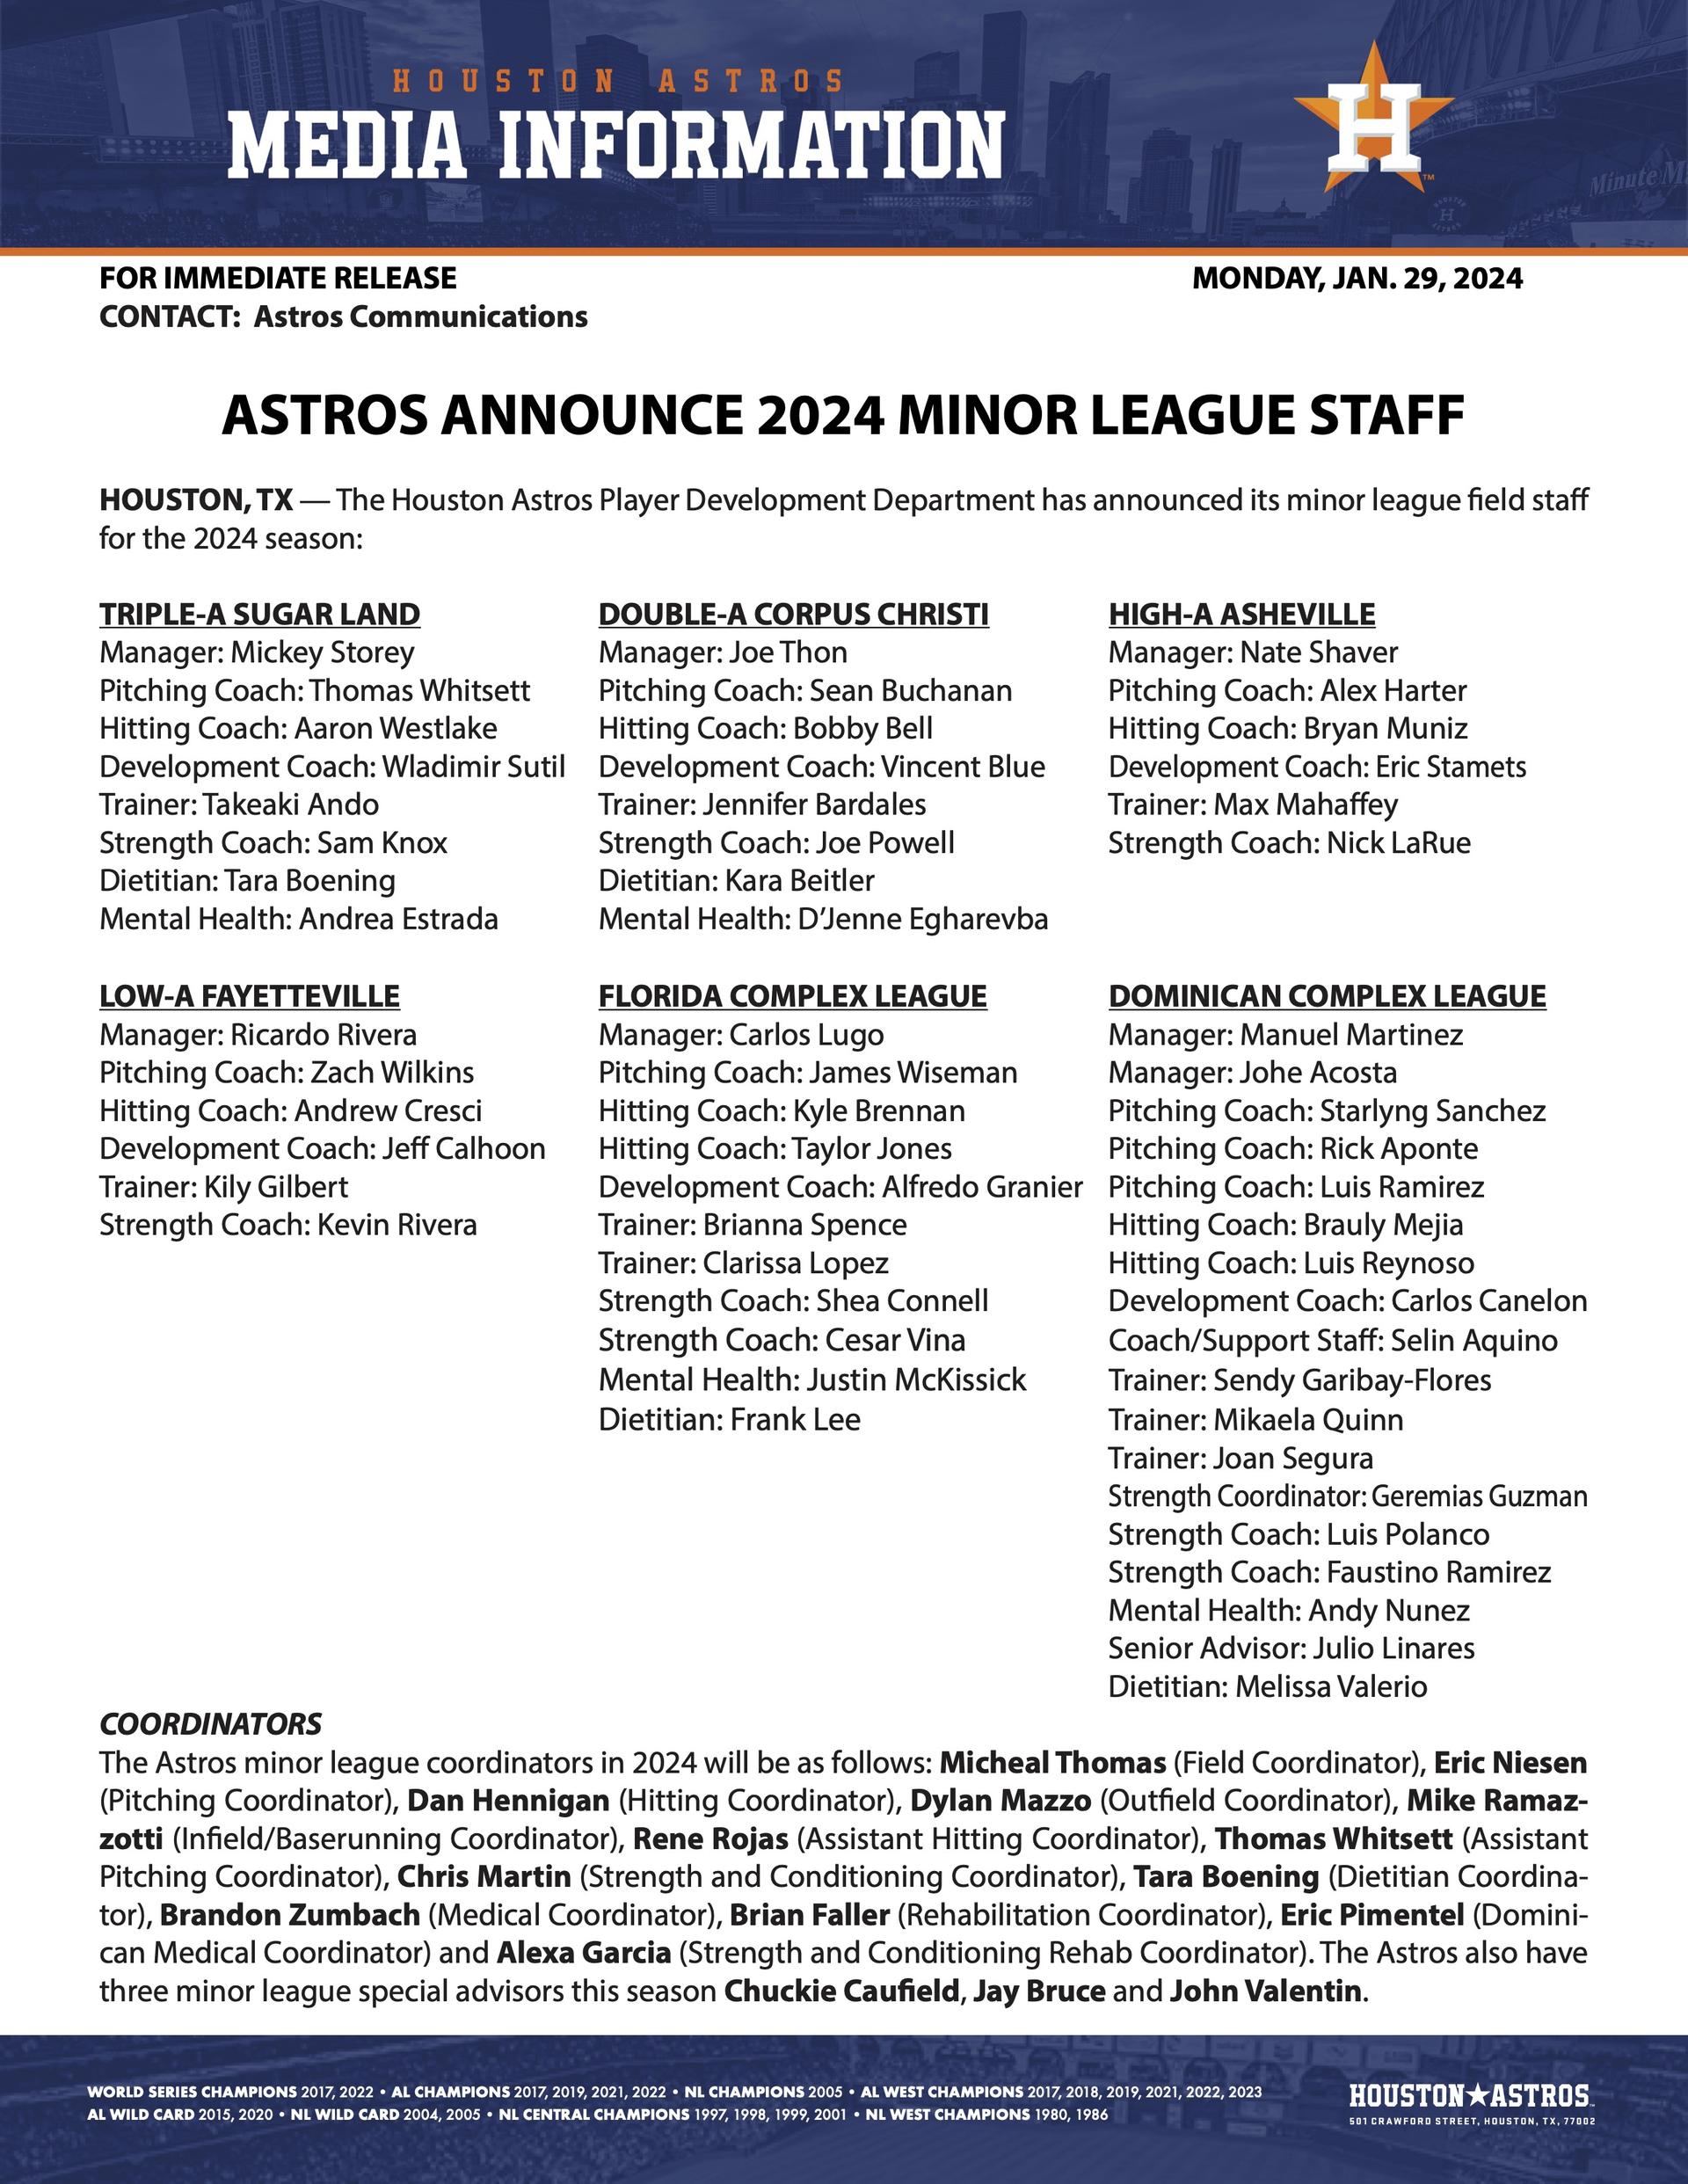 Astros 2024 Minor League staff